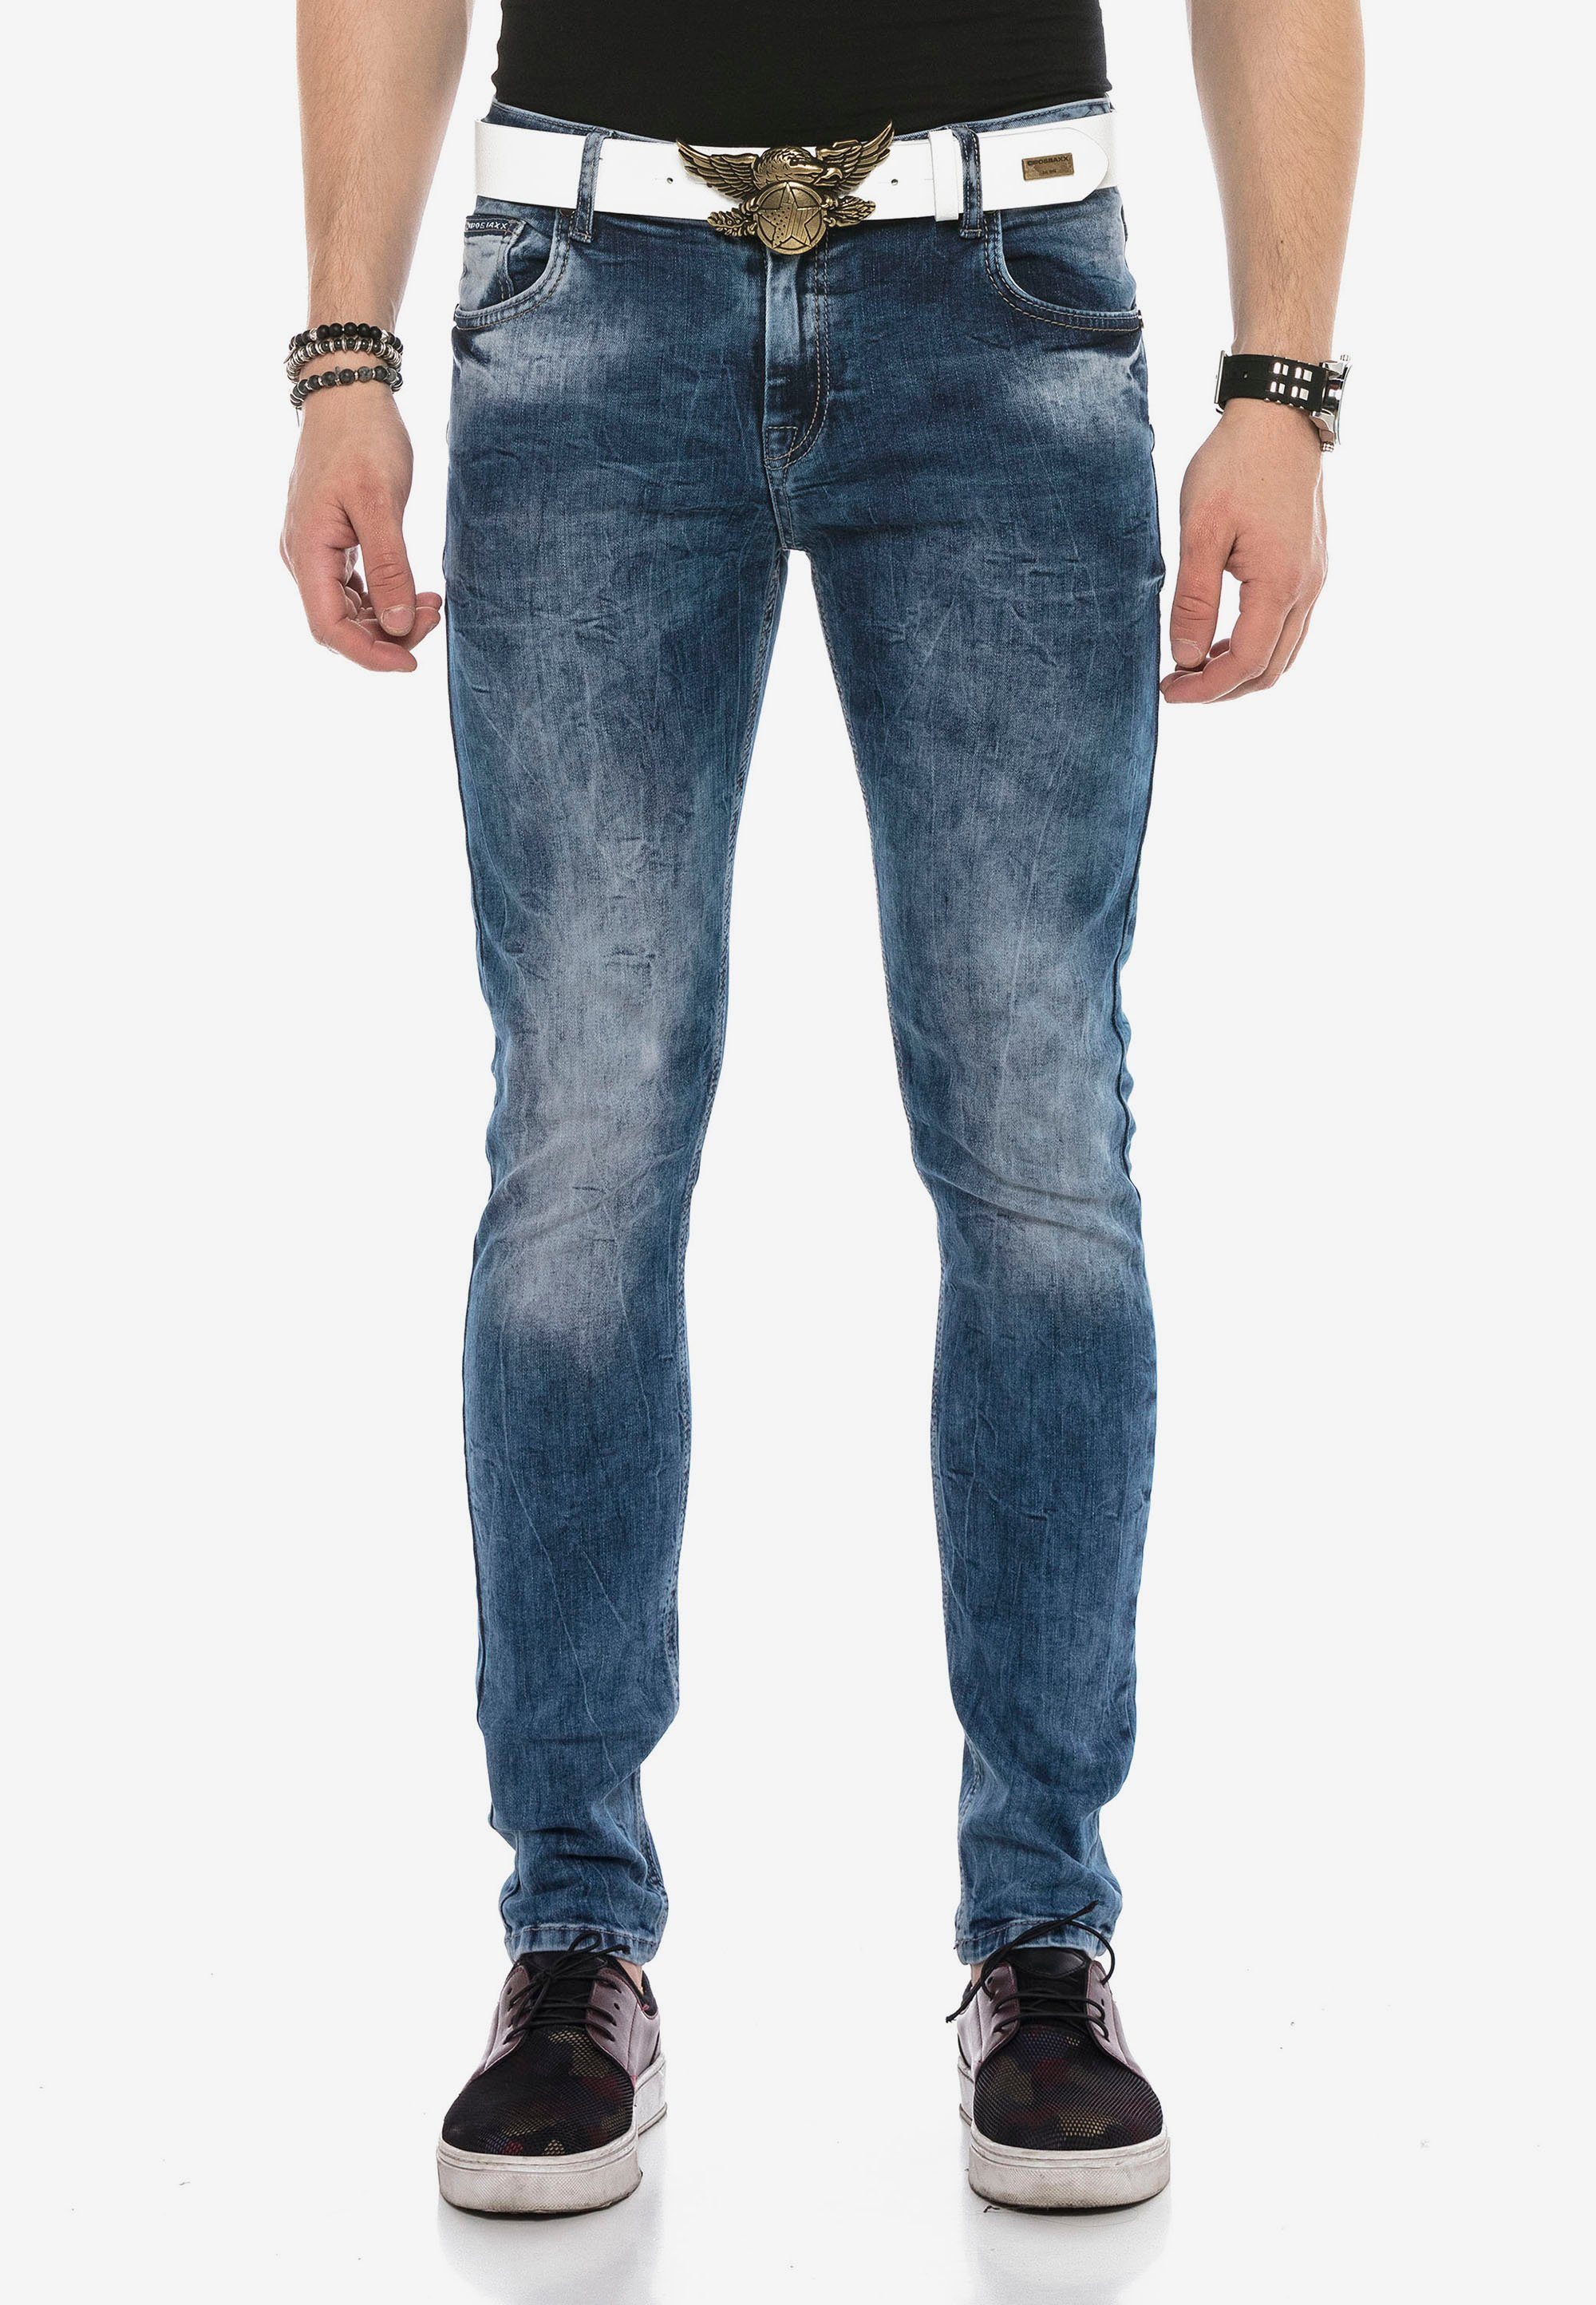 Baxx & Bequeme Jeans optimaler Slim-Straight Passform in mit Fit Cipo blau